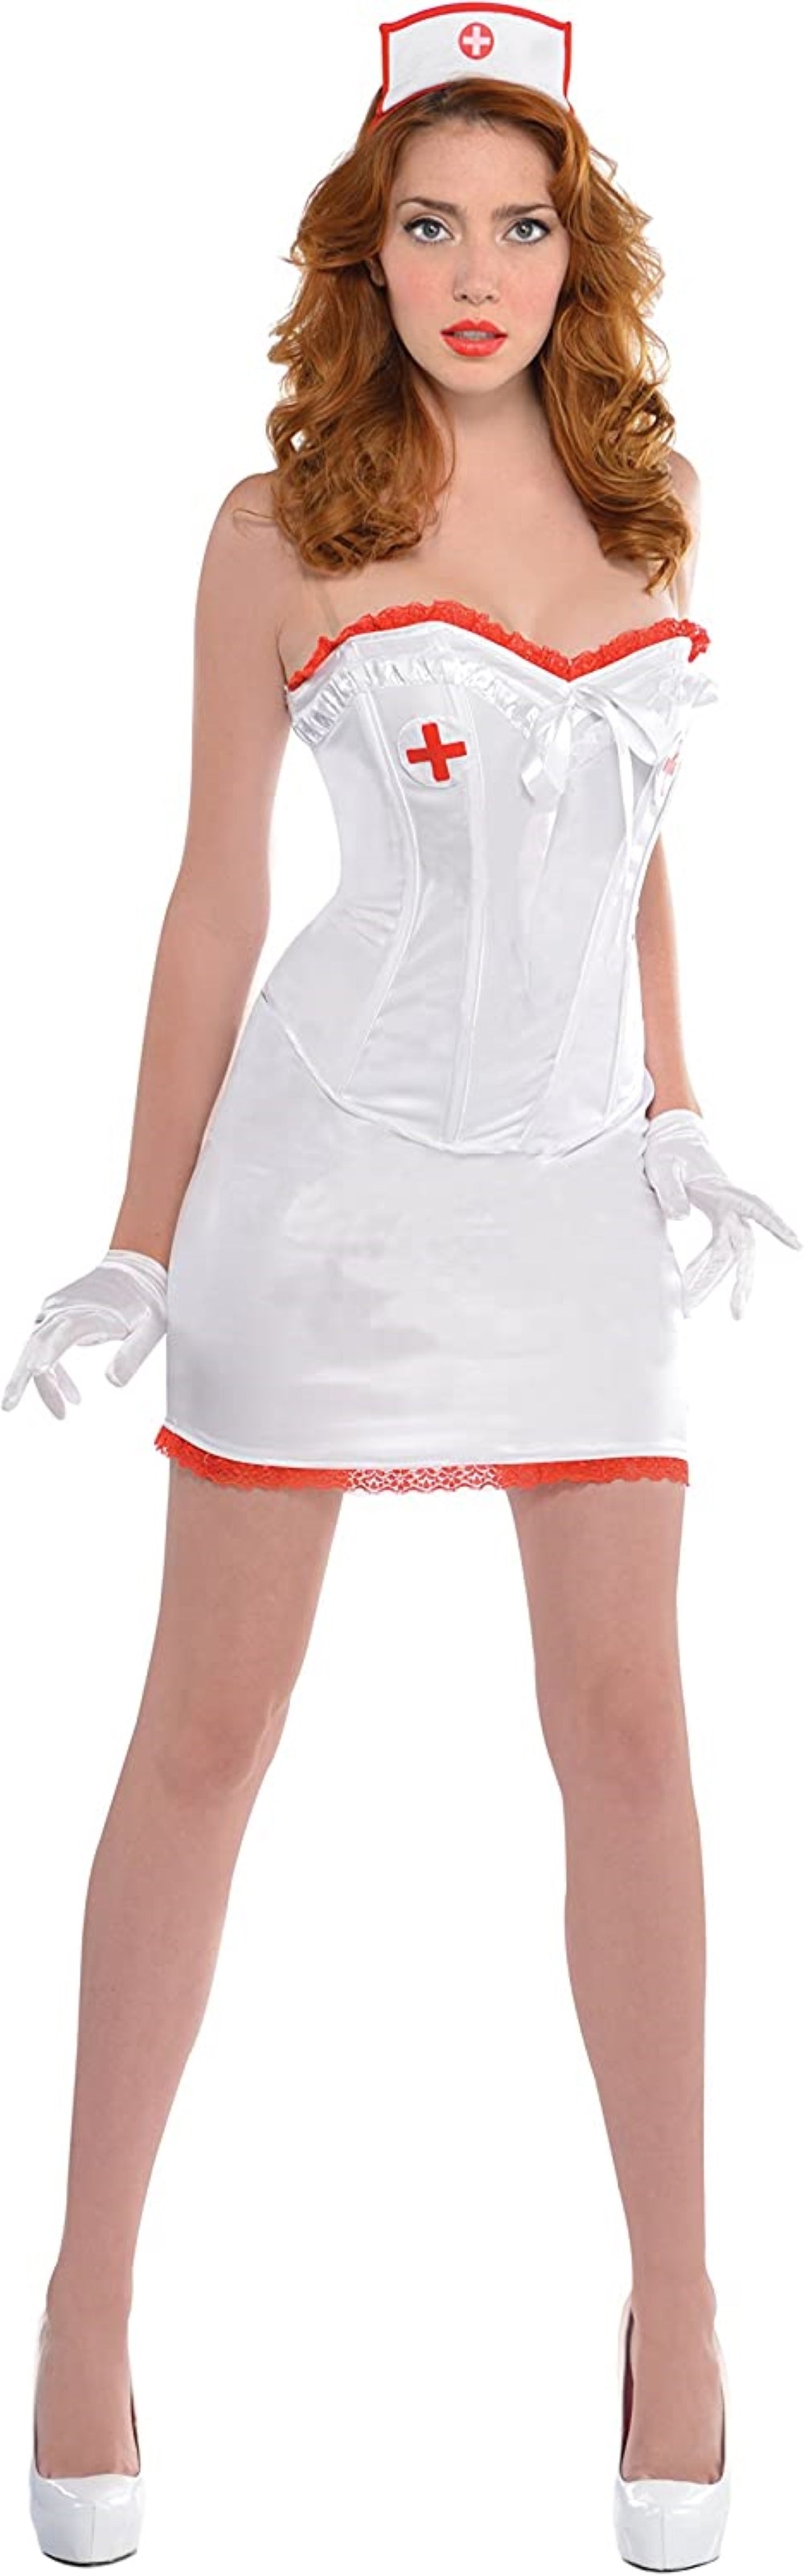 Sexy Nurse Medical A&E Adult Ladies Fancy Dress Costume